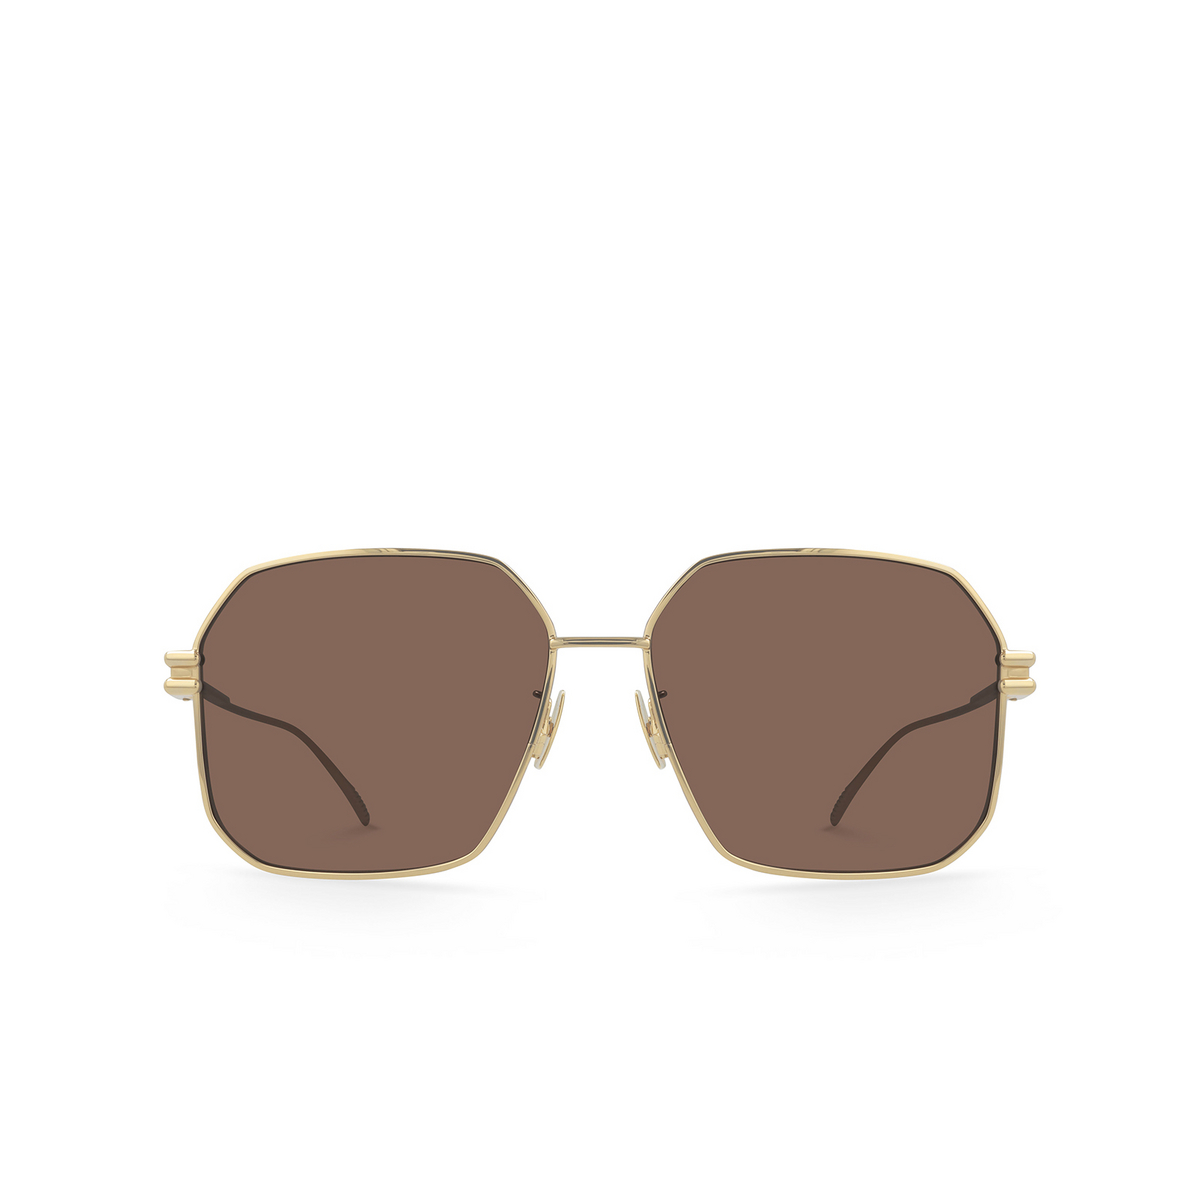 Bottega Veneta® Square Sunglasses: BV1047S color Gold 002 - front view.